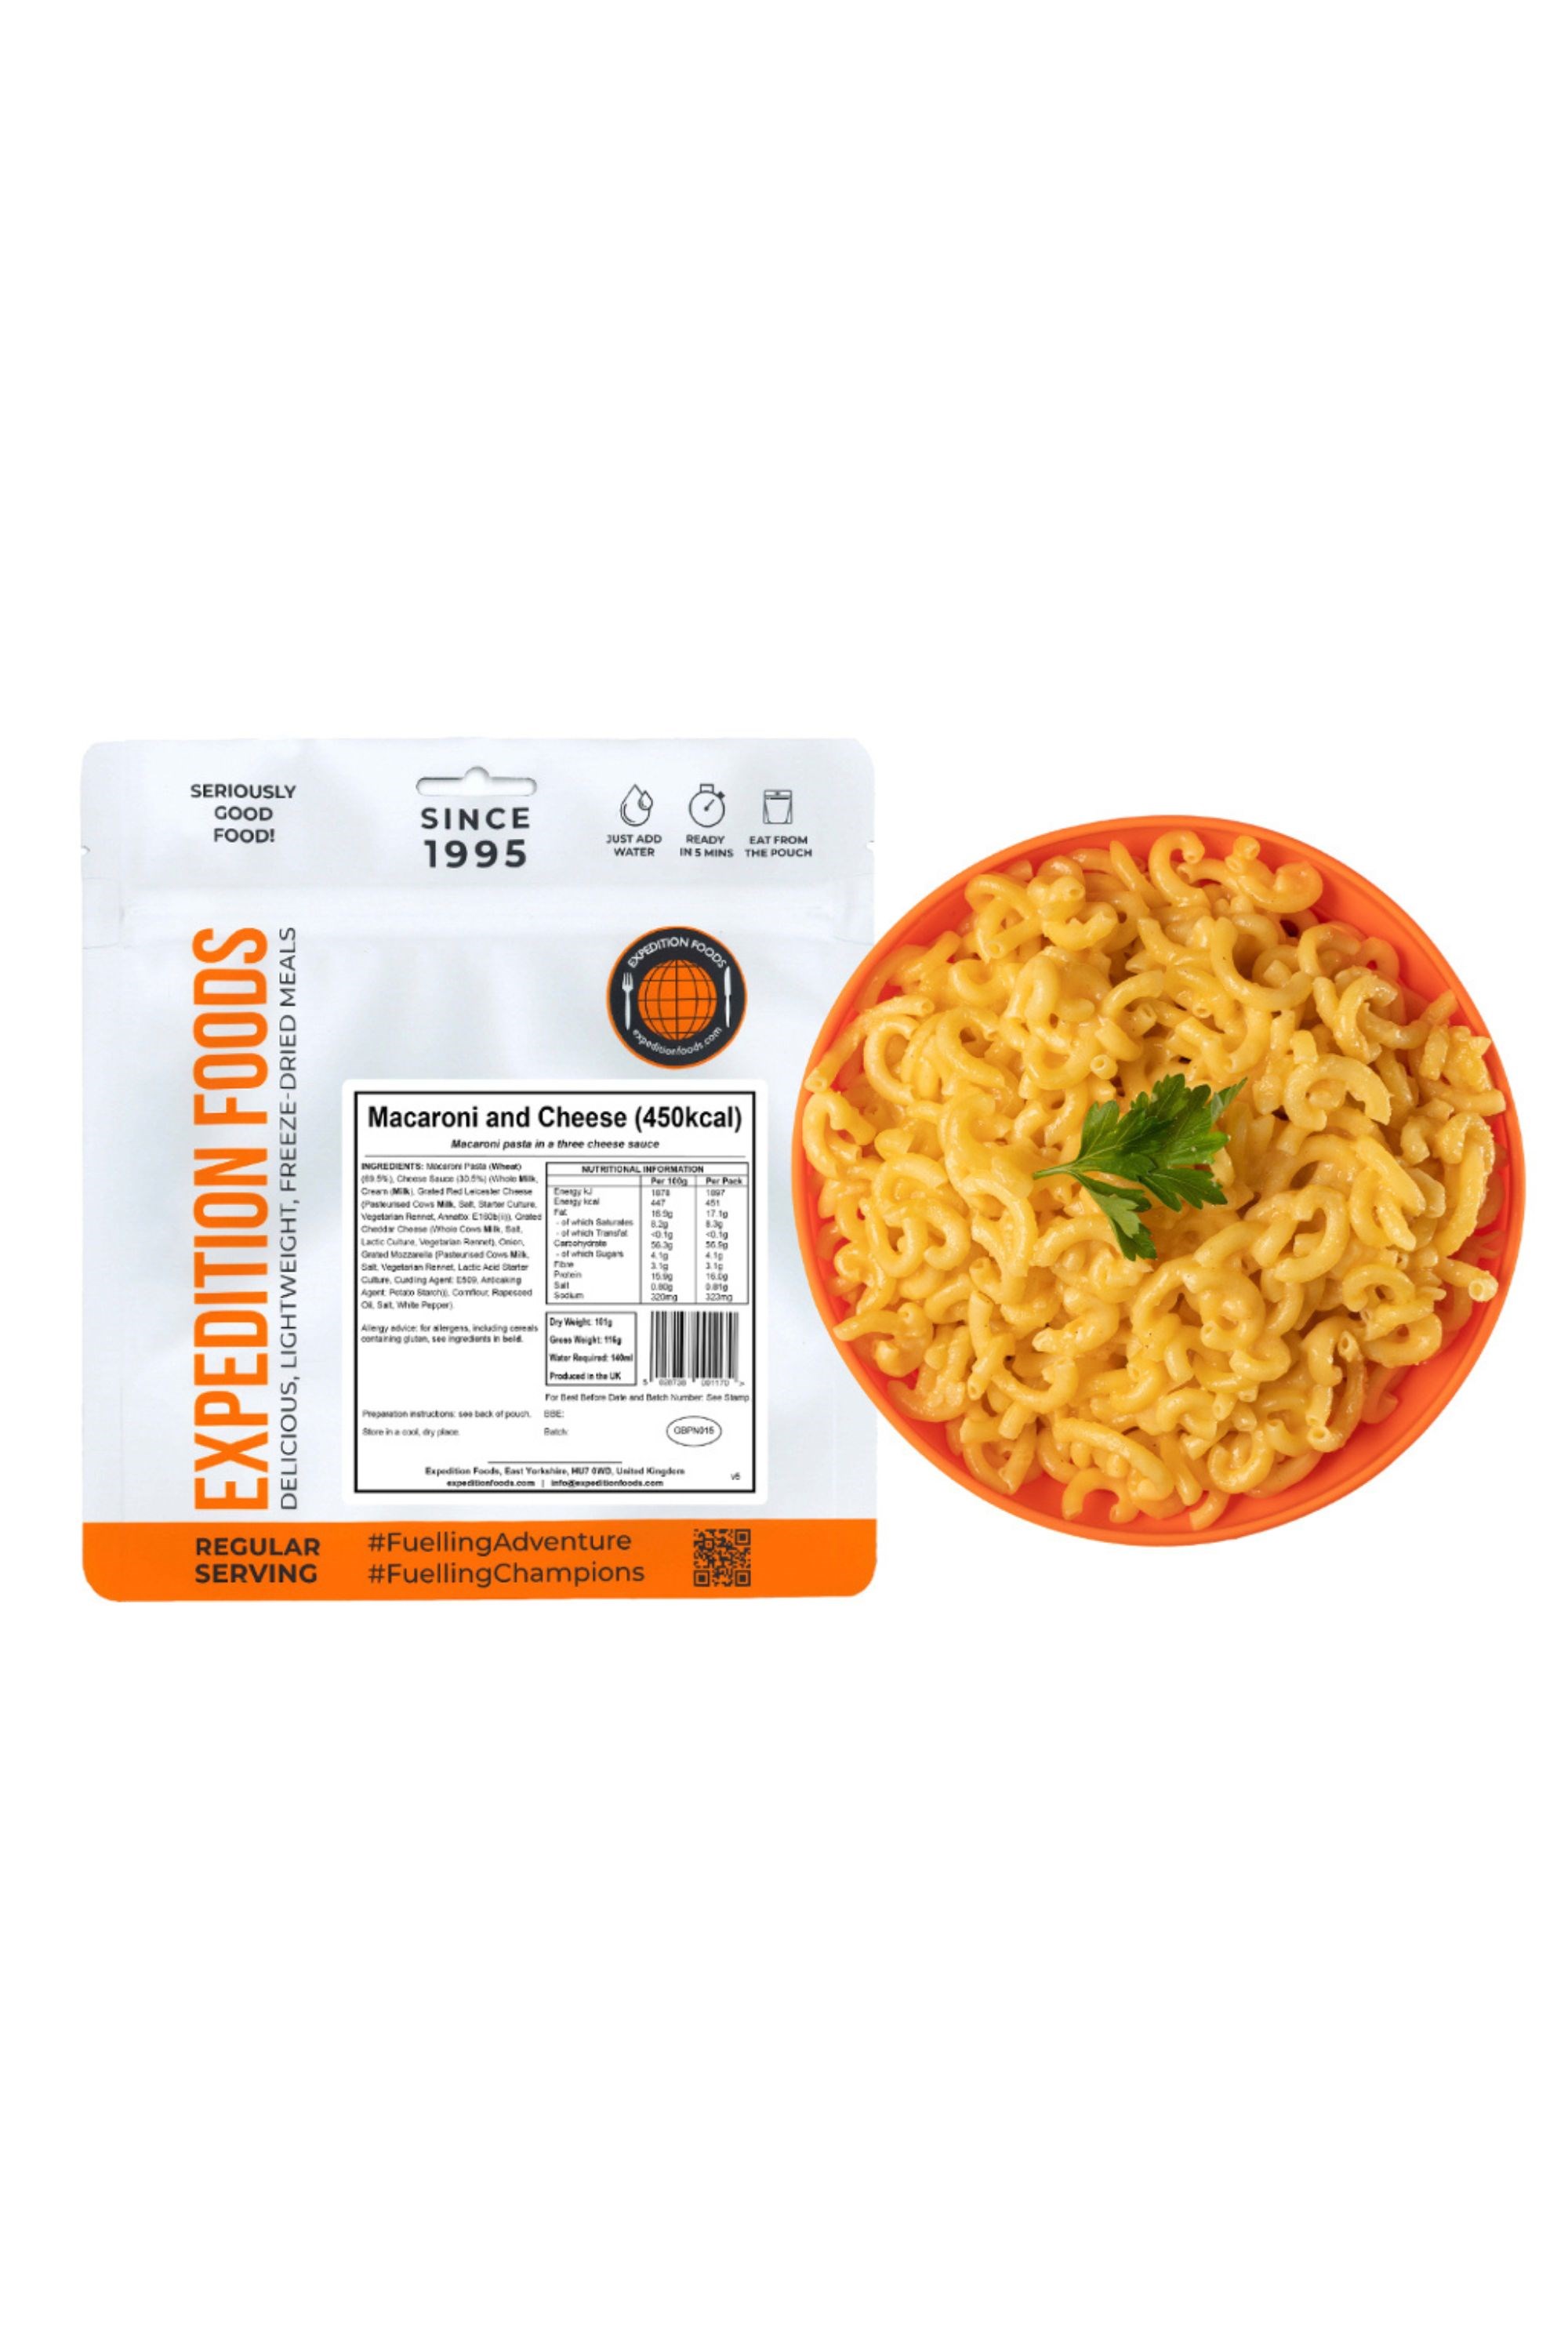 Macaroni And Cheese Camping Food (450kcal) -